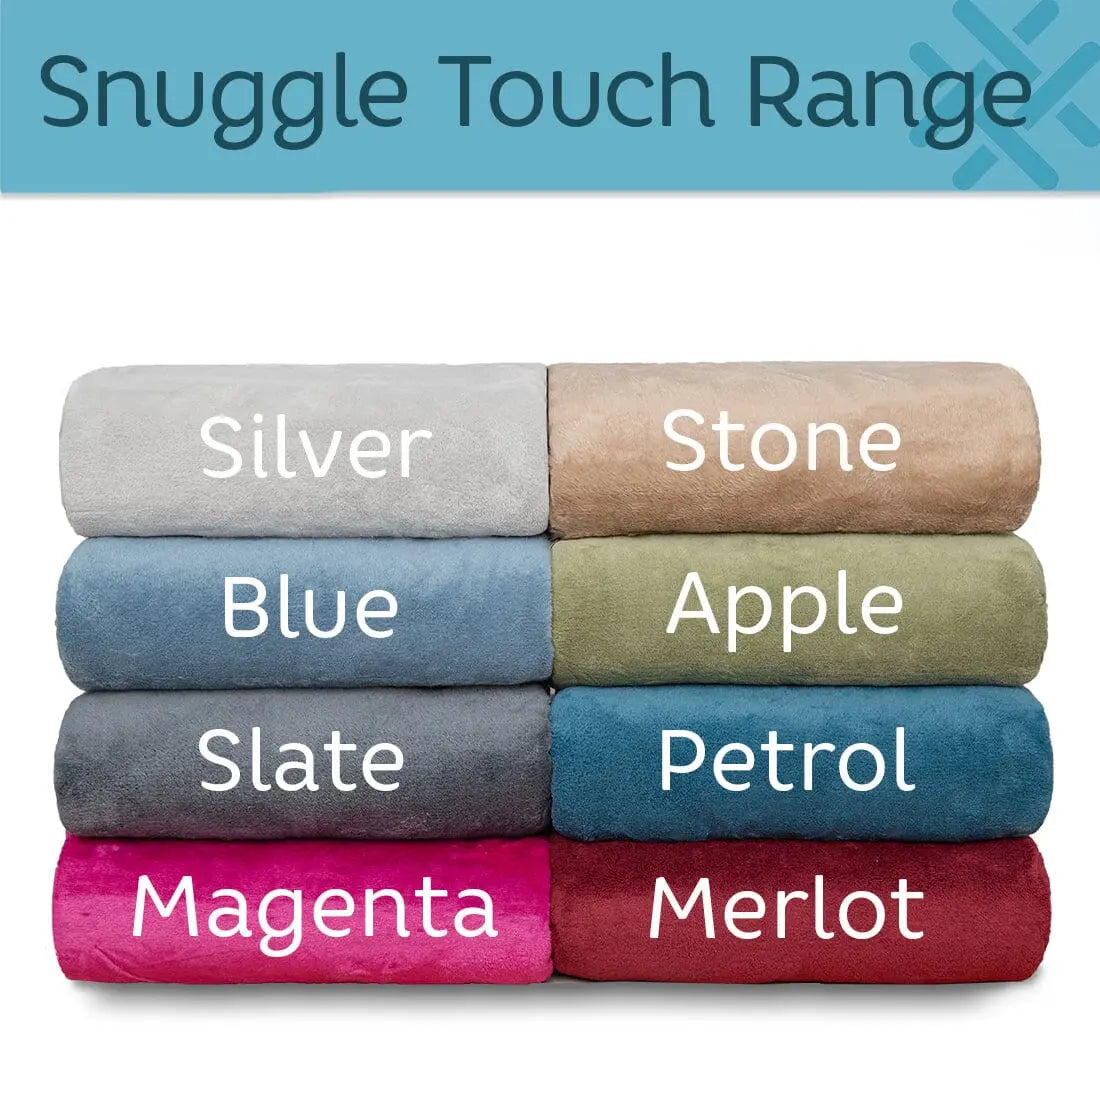 Snuggle Touch Blanket Colour Range